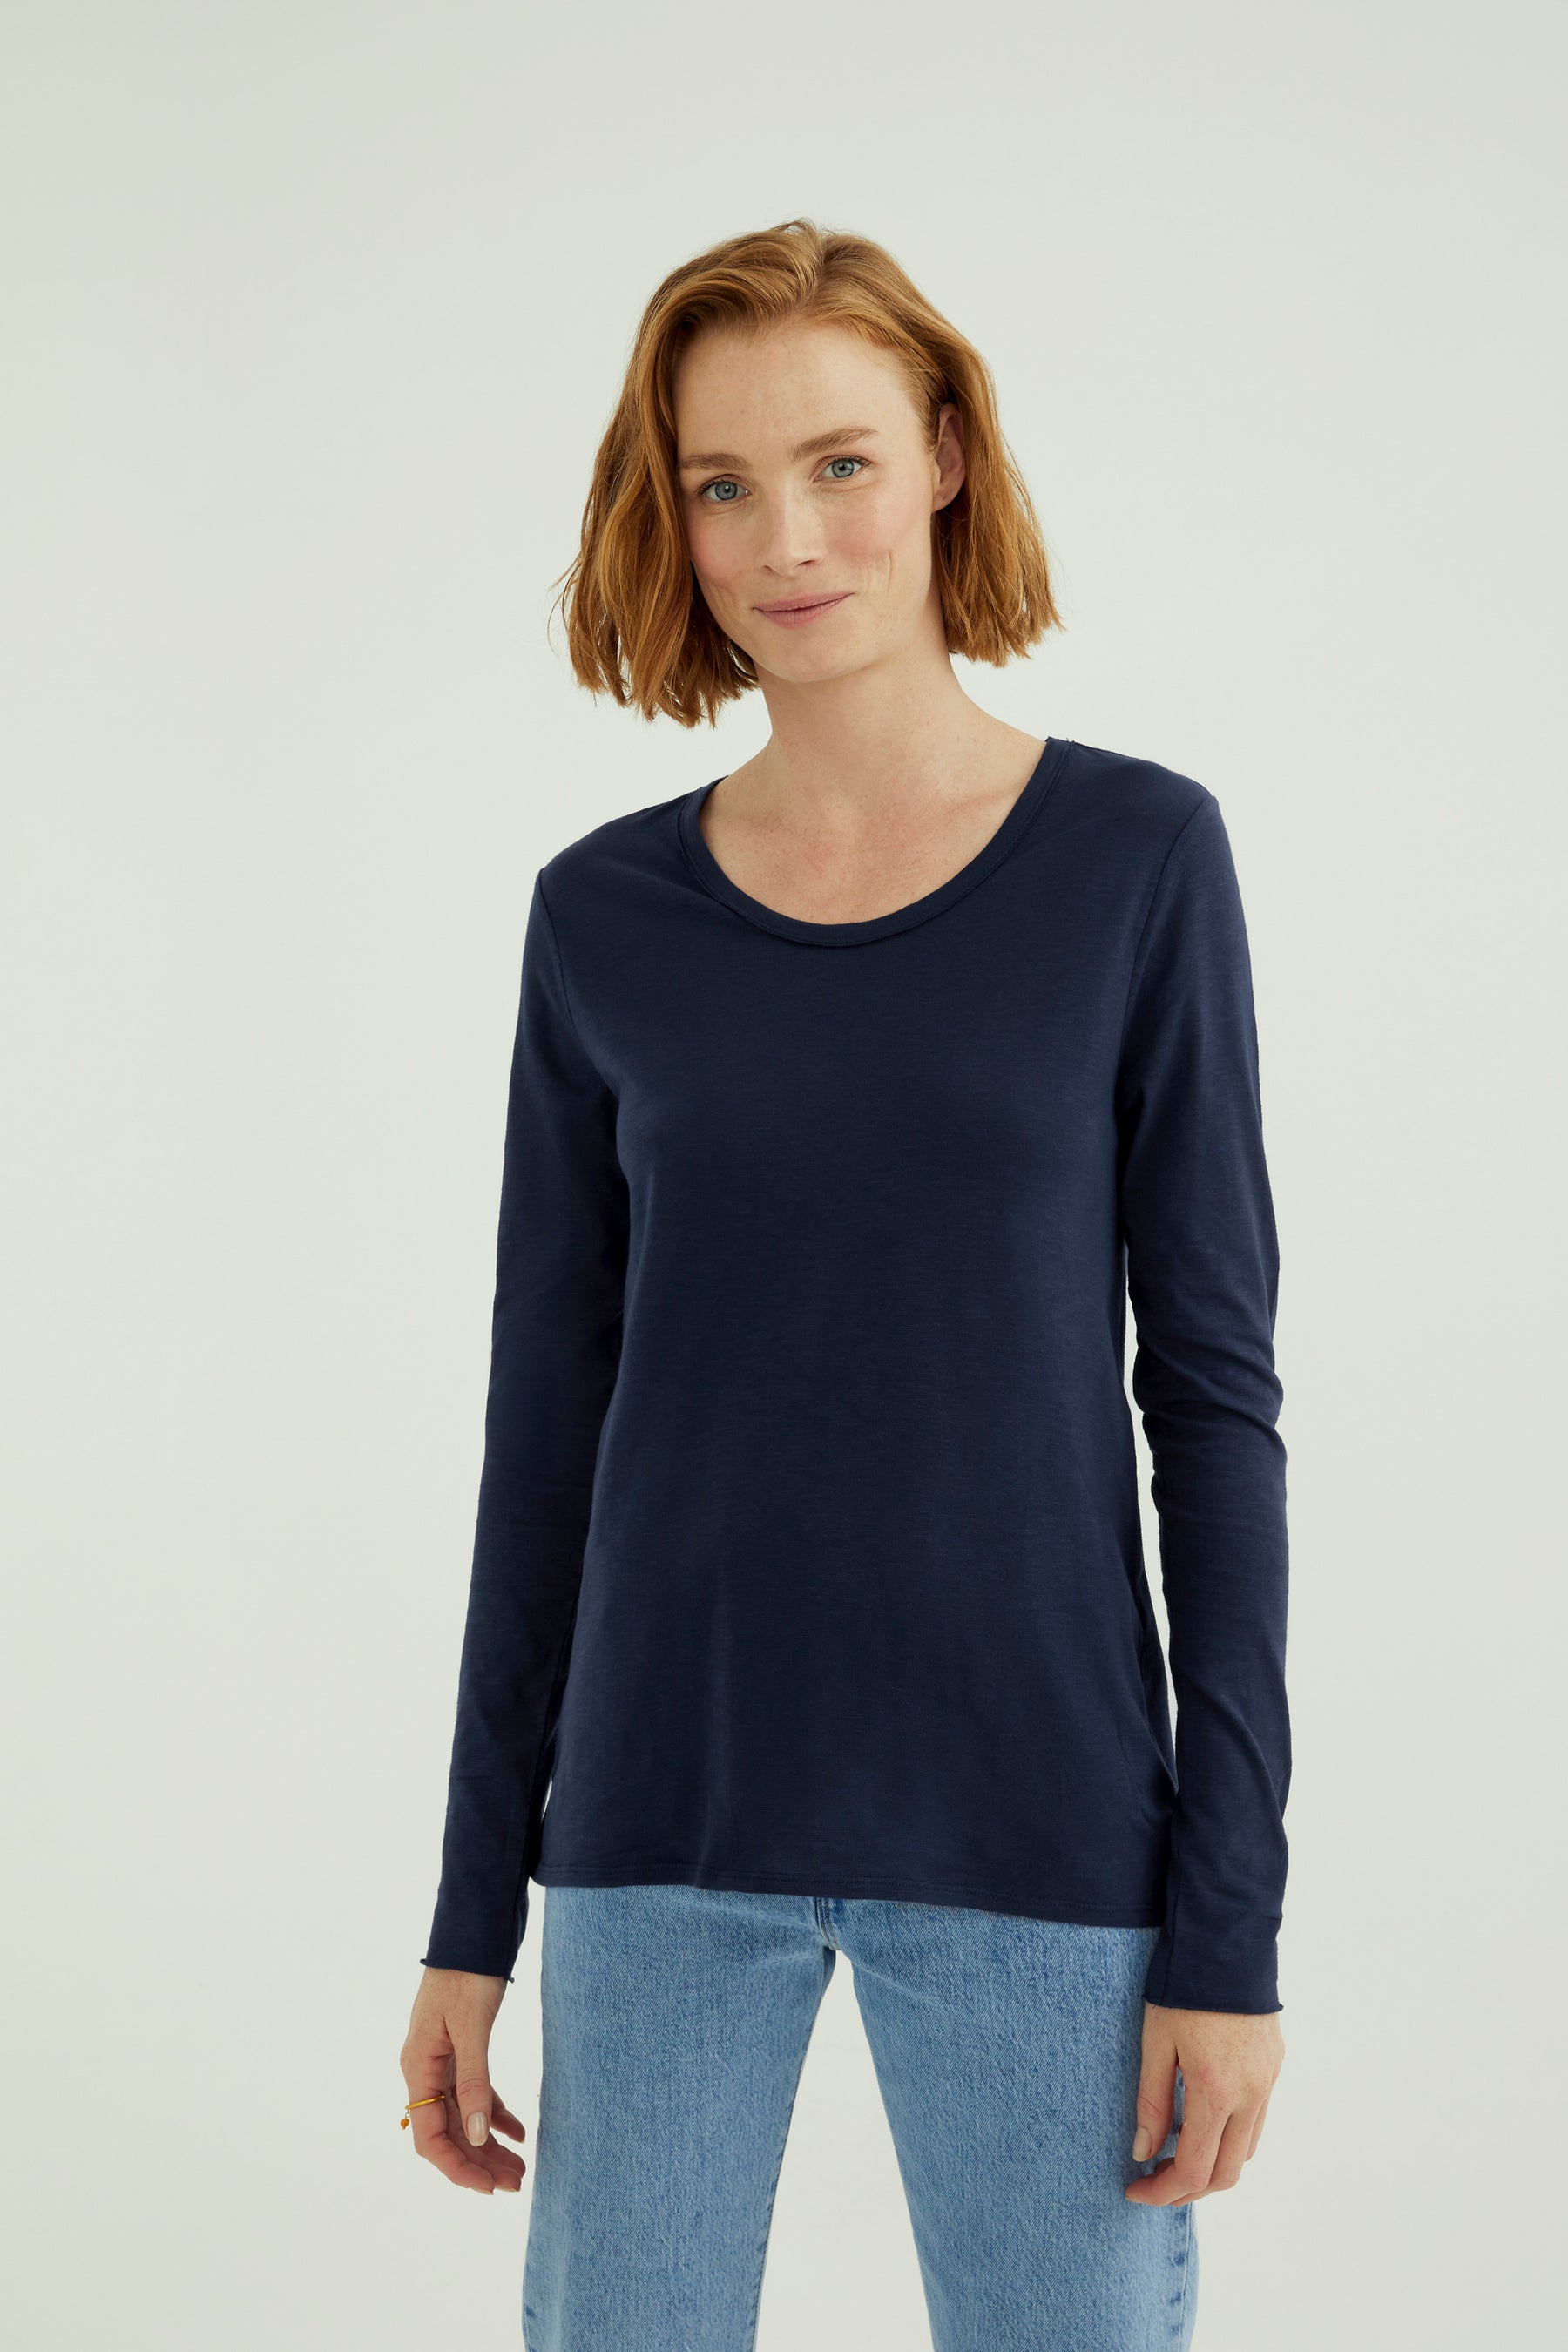 Blue T-Shirt Long Women Neck Round Dark Miriam Sleeve